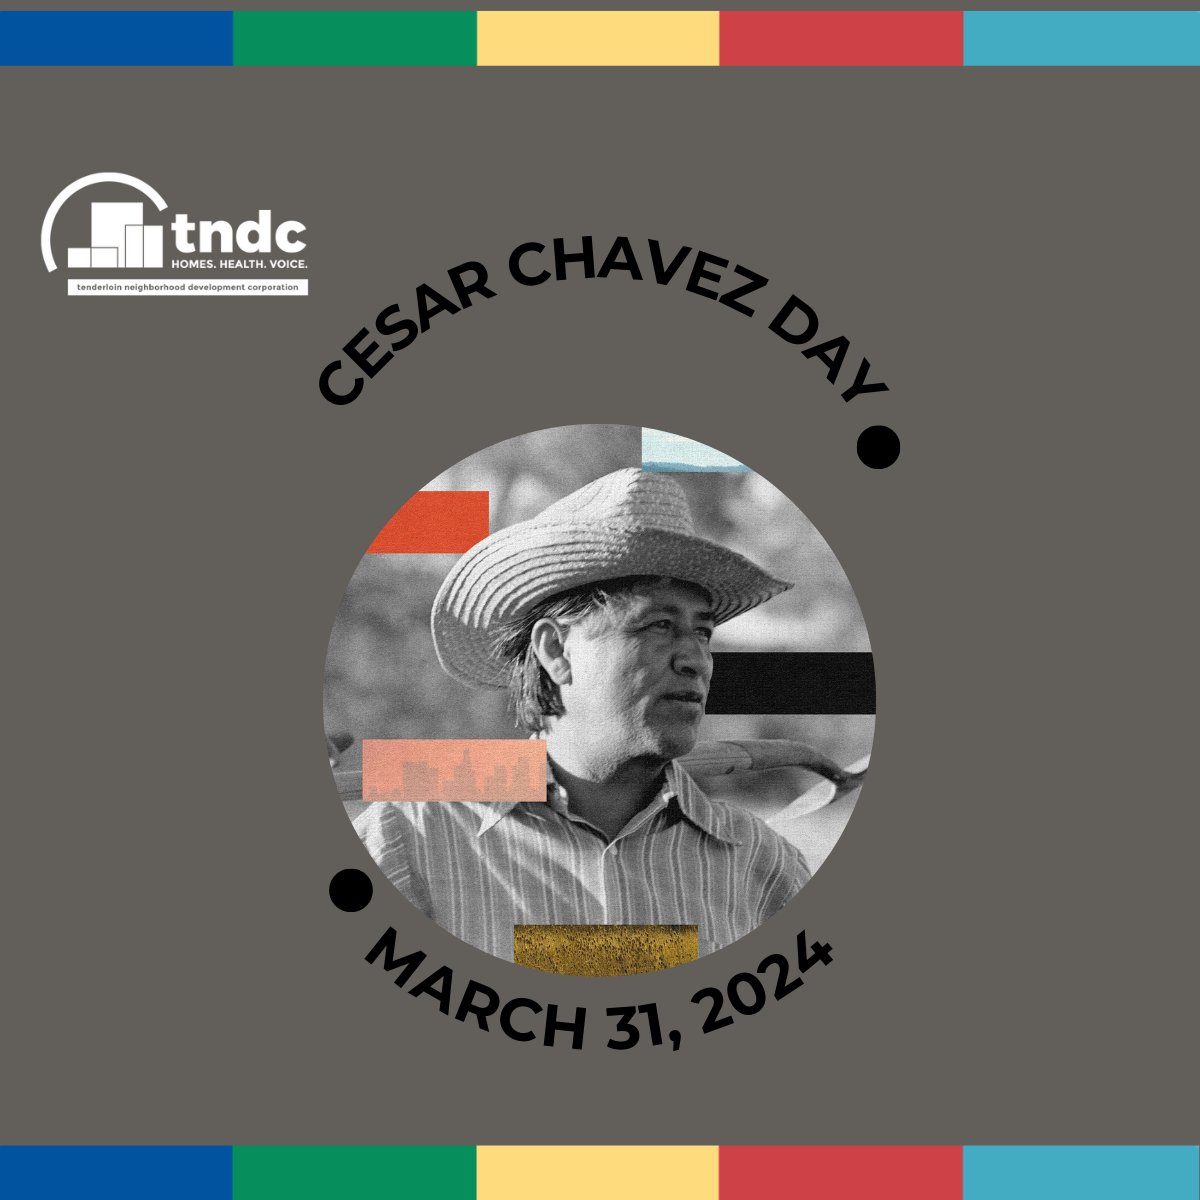 TNDC observes CESAR E. CHAVEZ DAY. #tndc #cesarchavez #labor #WorkersRights #SocialJustice #unitedfarmworkers